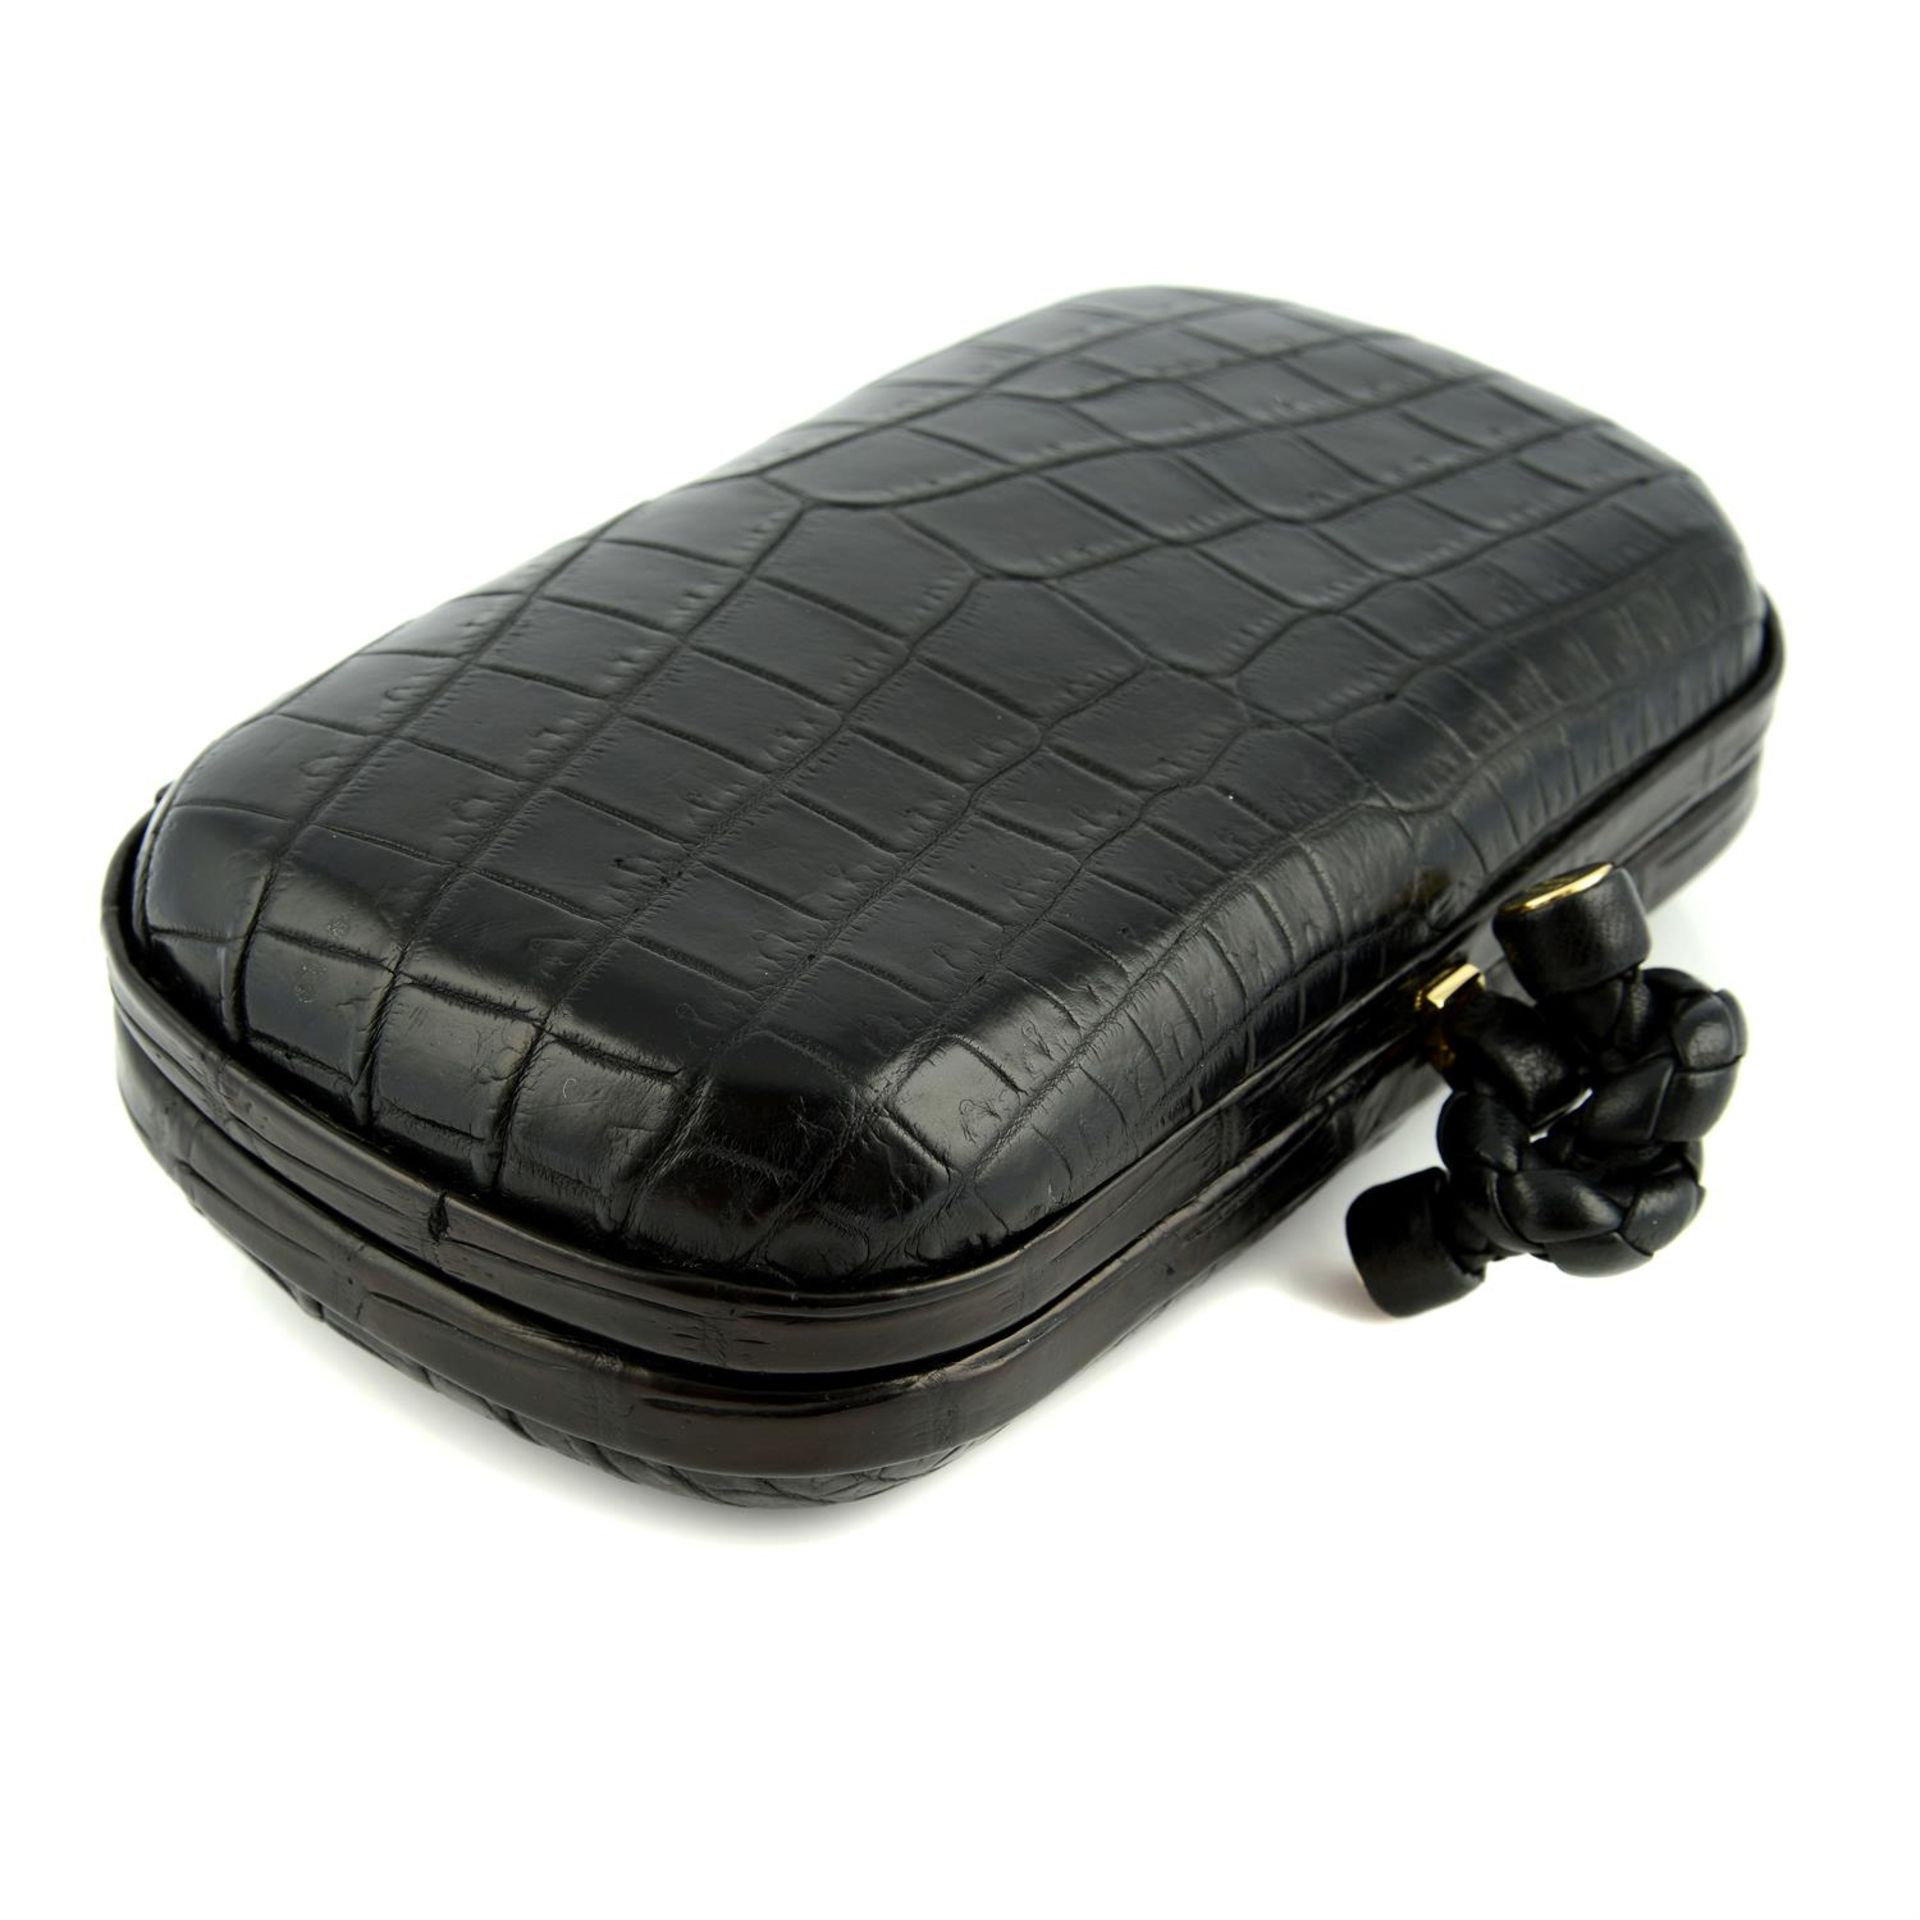 BOTTEGA VENETA- a black crocodile knot clutch bag. - Image 3 of 4